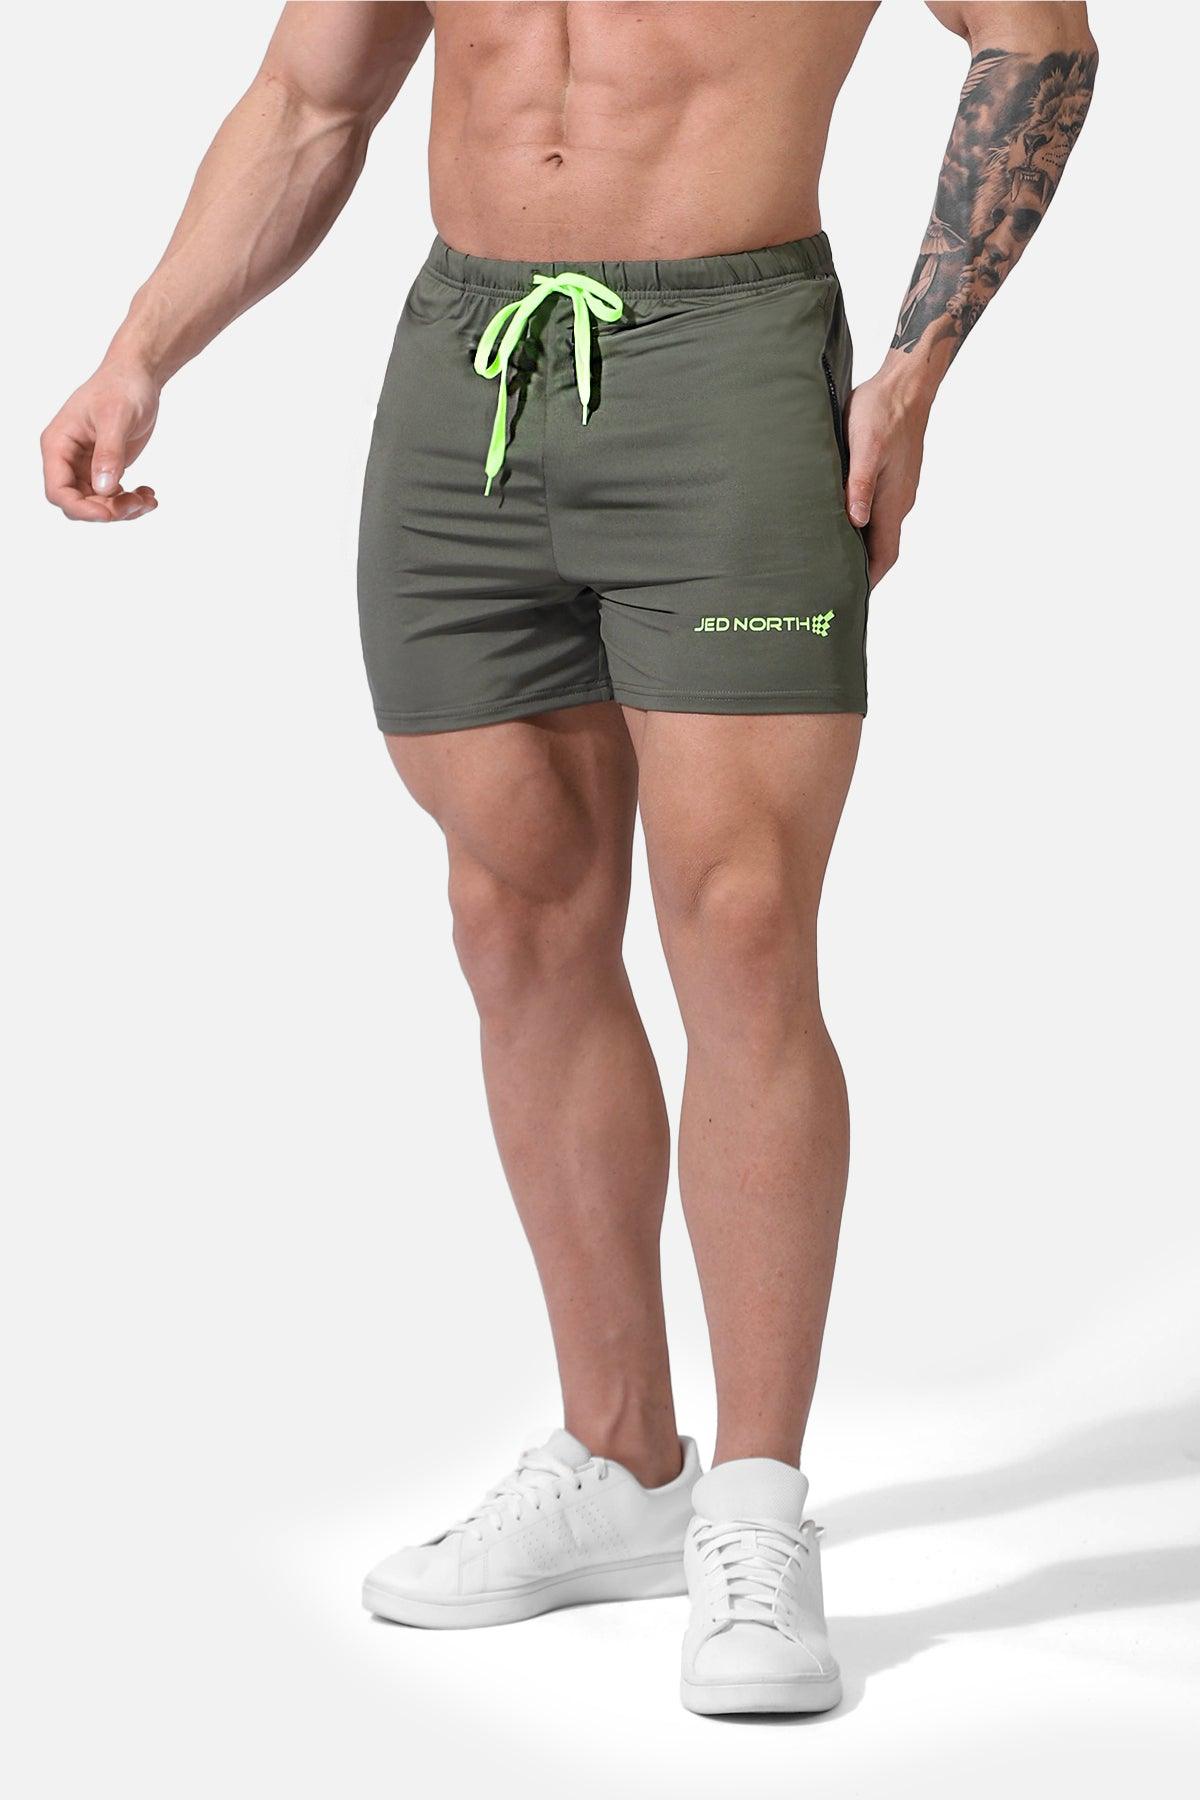 Agile Bodybuilding 4'' Shorts w Zipper Pockets - Olive - Jed North